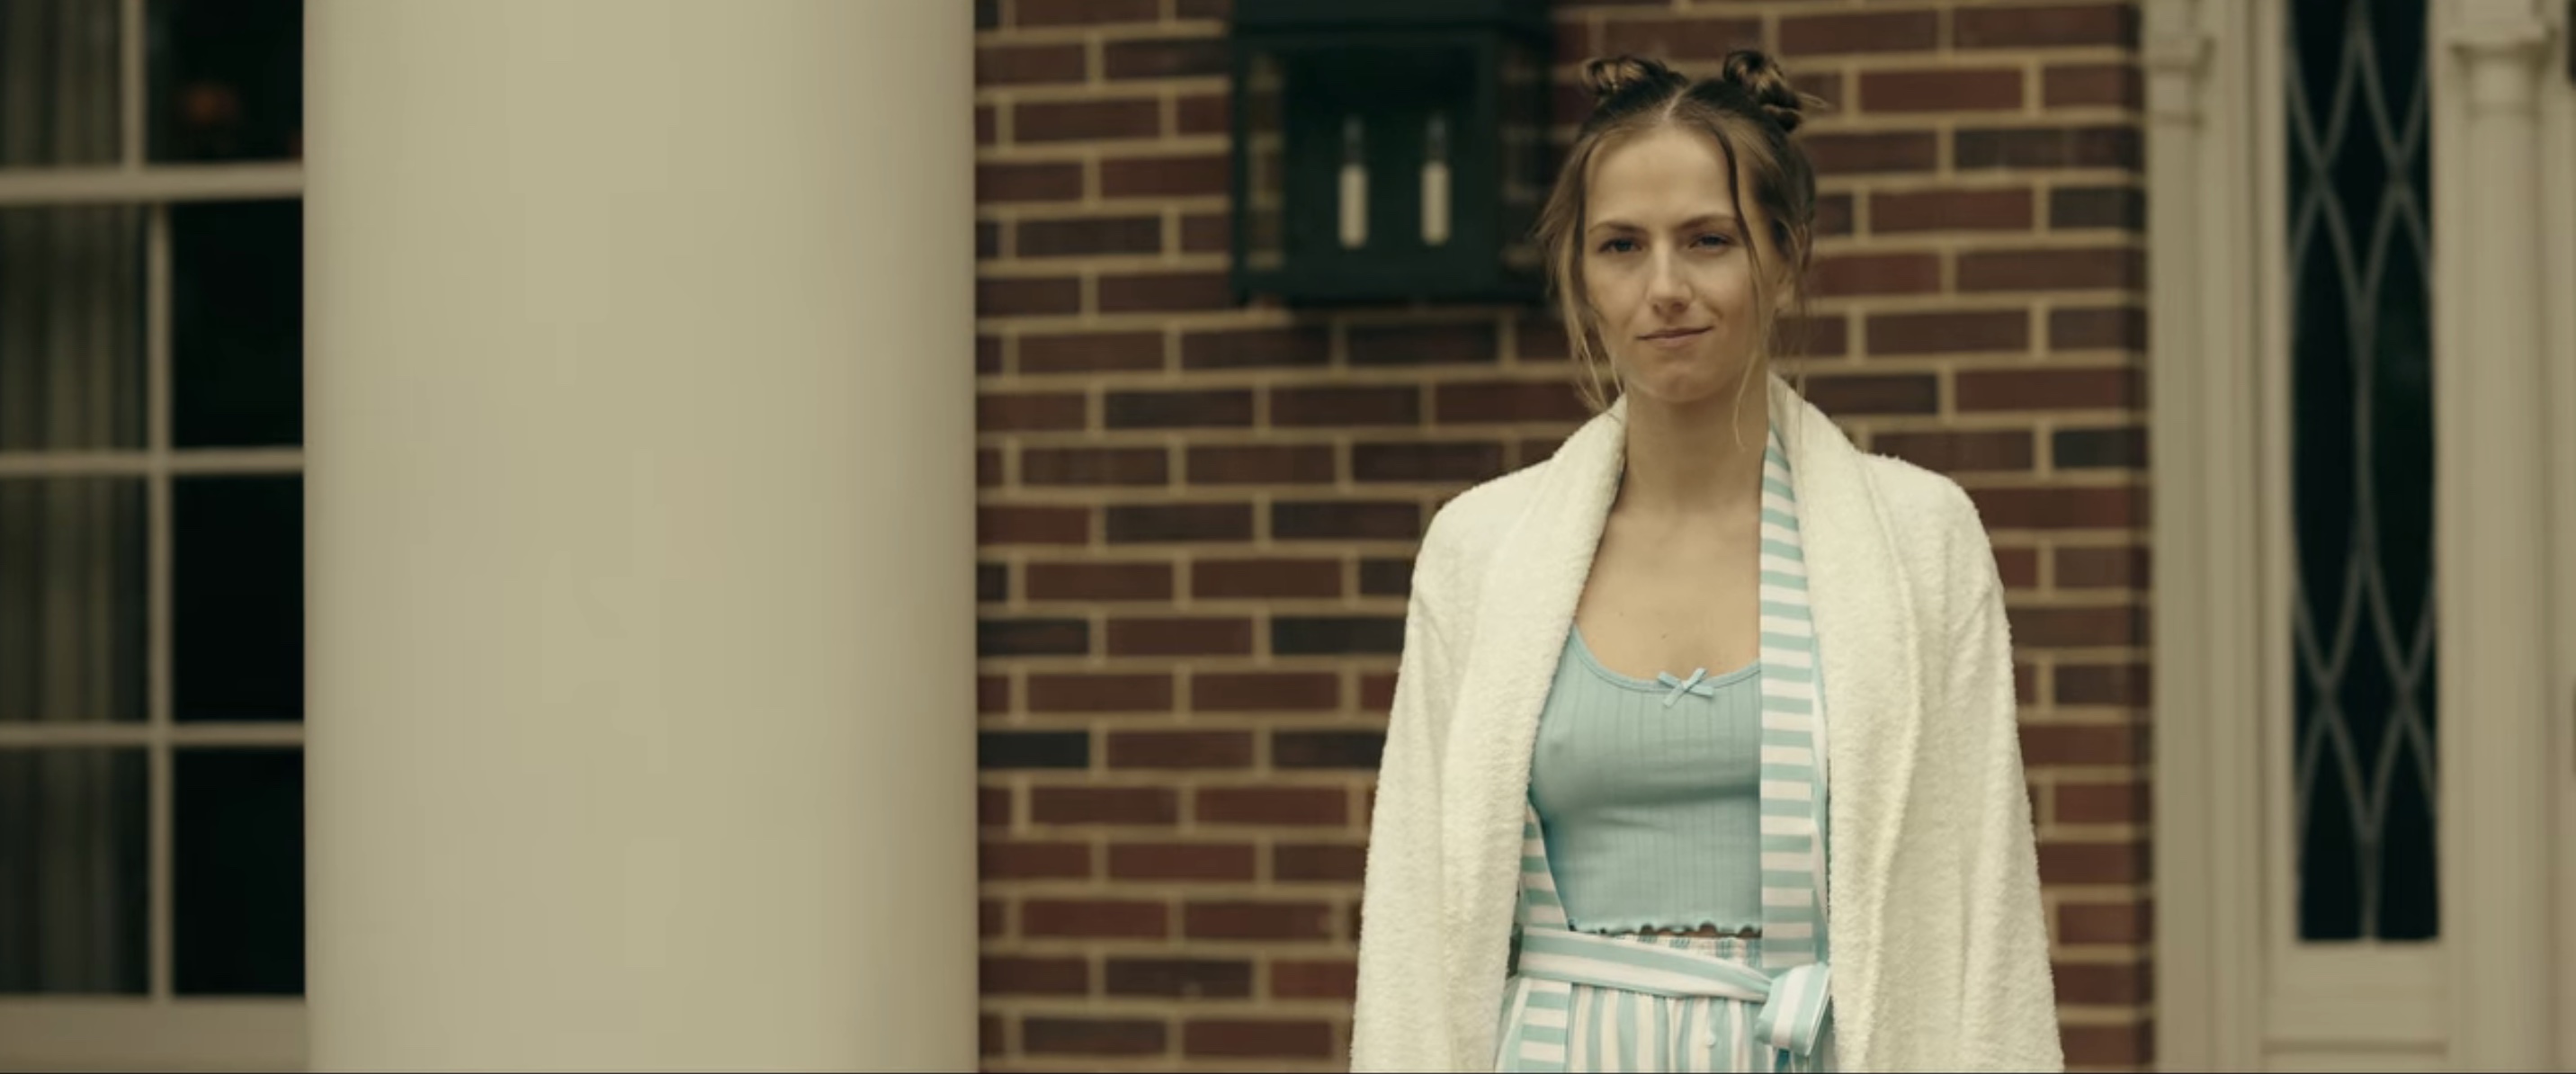 The Tutor Cast on Netflix - Ekaterina Baker as Teddi